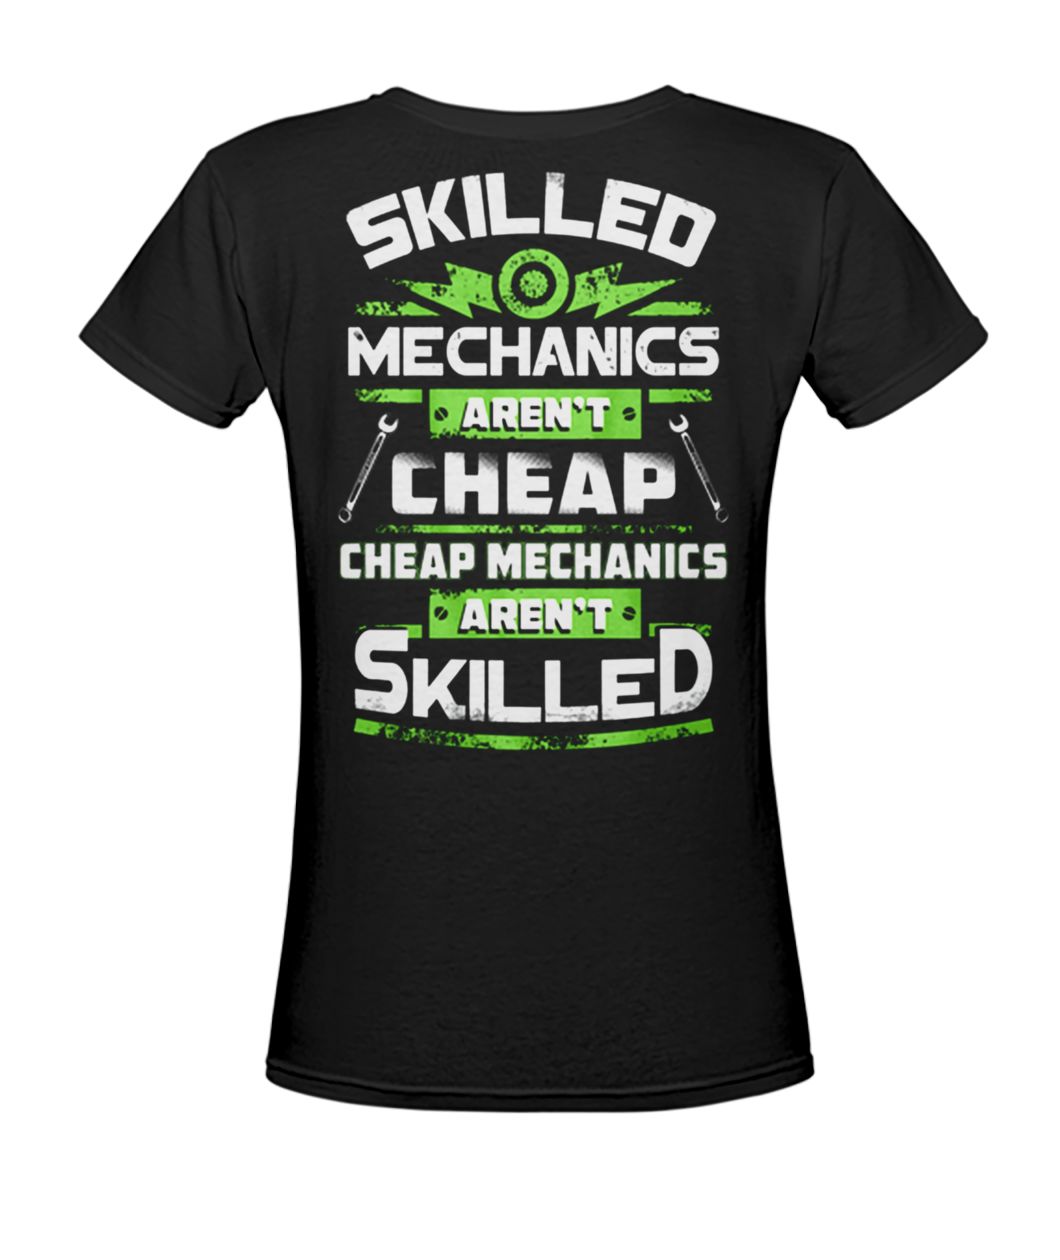 Skilled mechanics aren't cheap cheap mechanics aren't skilled women's v-neck